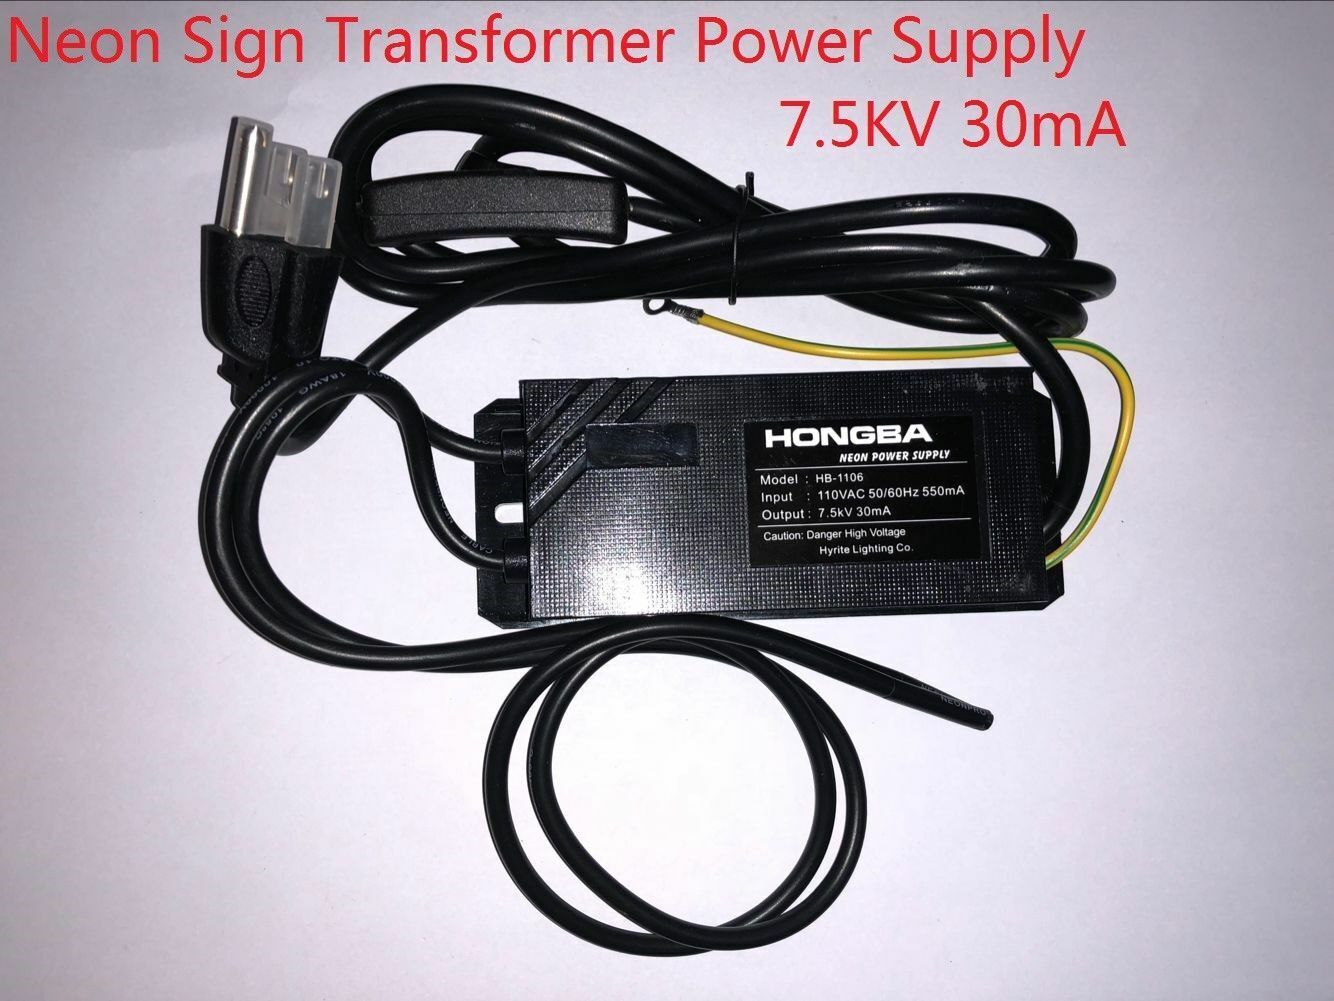 7.5kV 30mA-110VAC 50/60HZ 550mA Neon Sign Electronic Transformer Power Supply